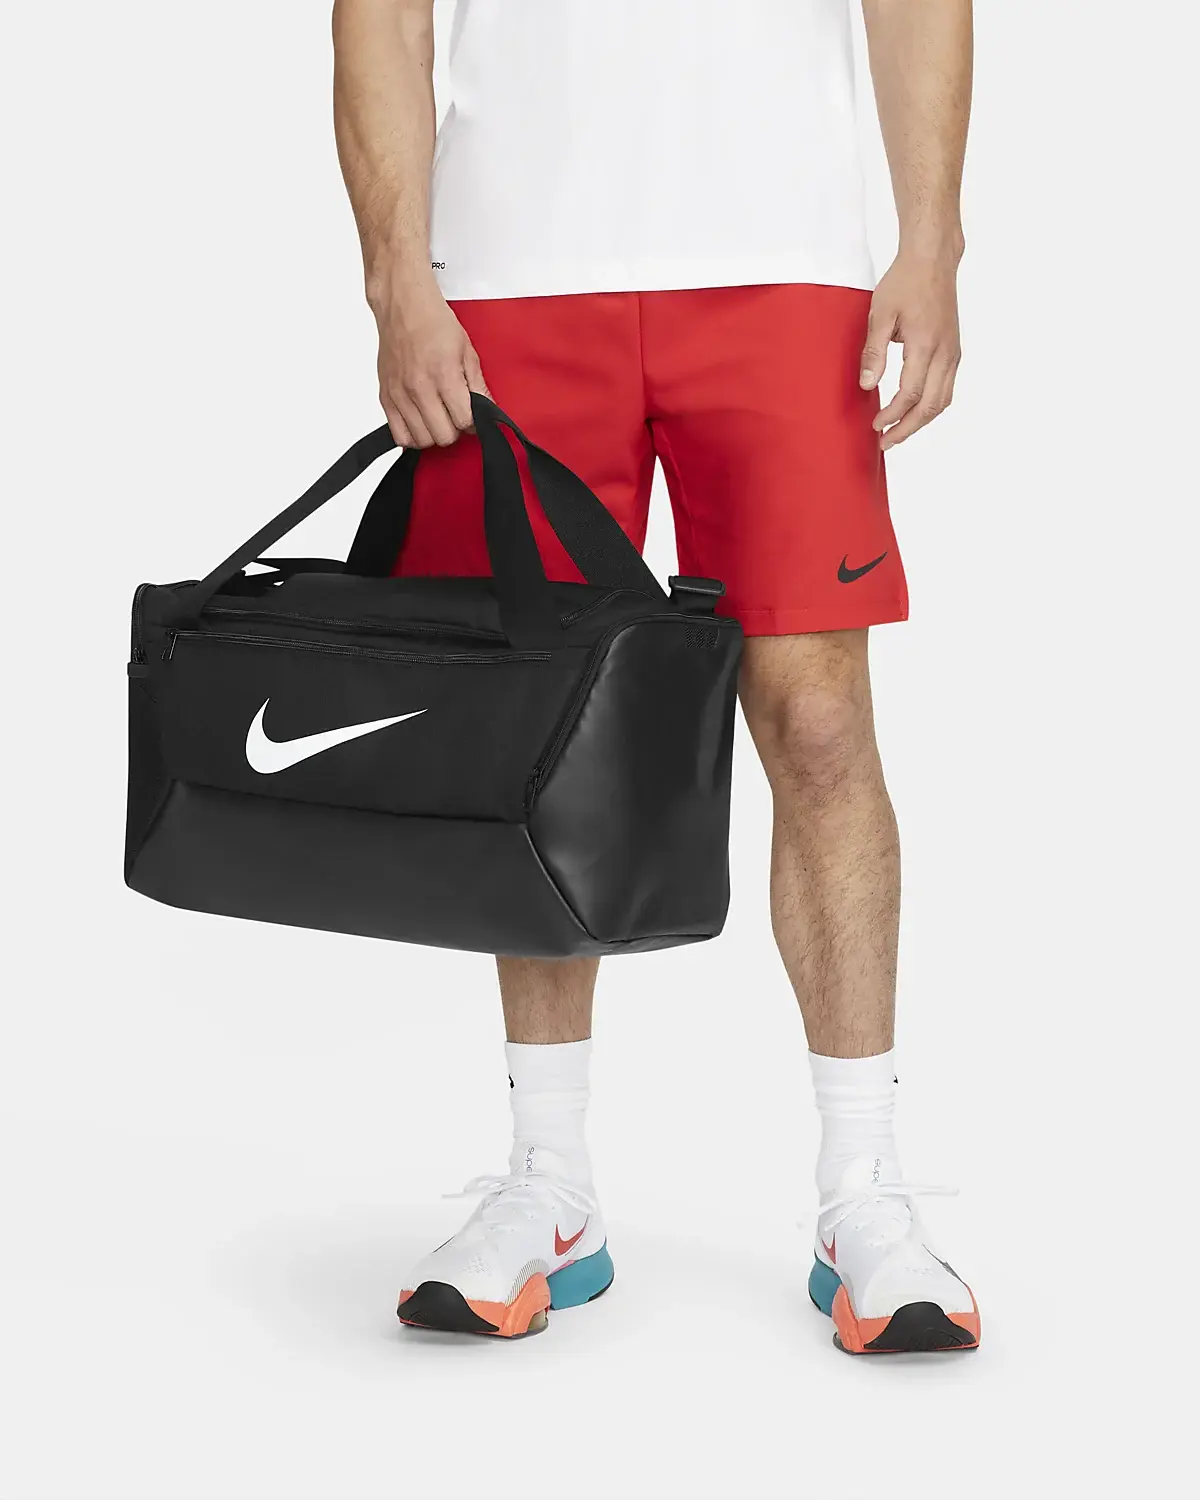 Nike Brasilia 9.5. 1